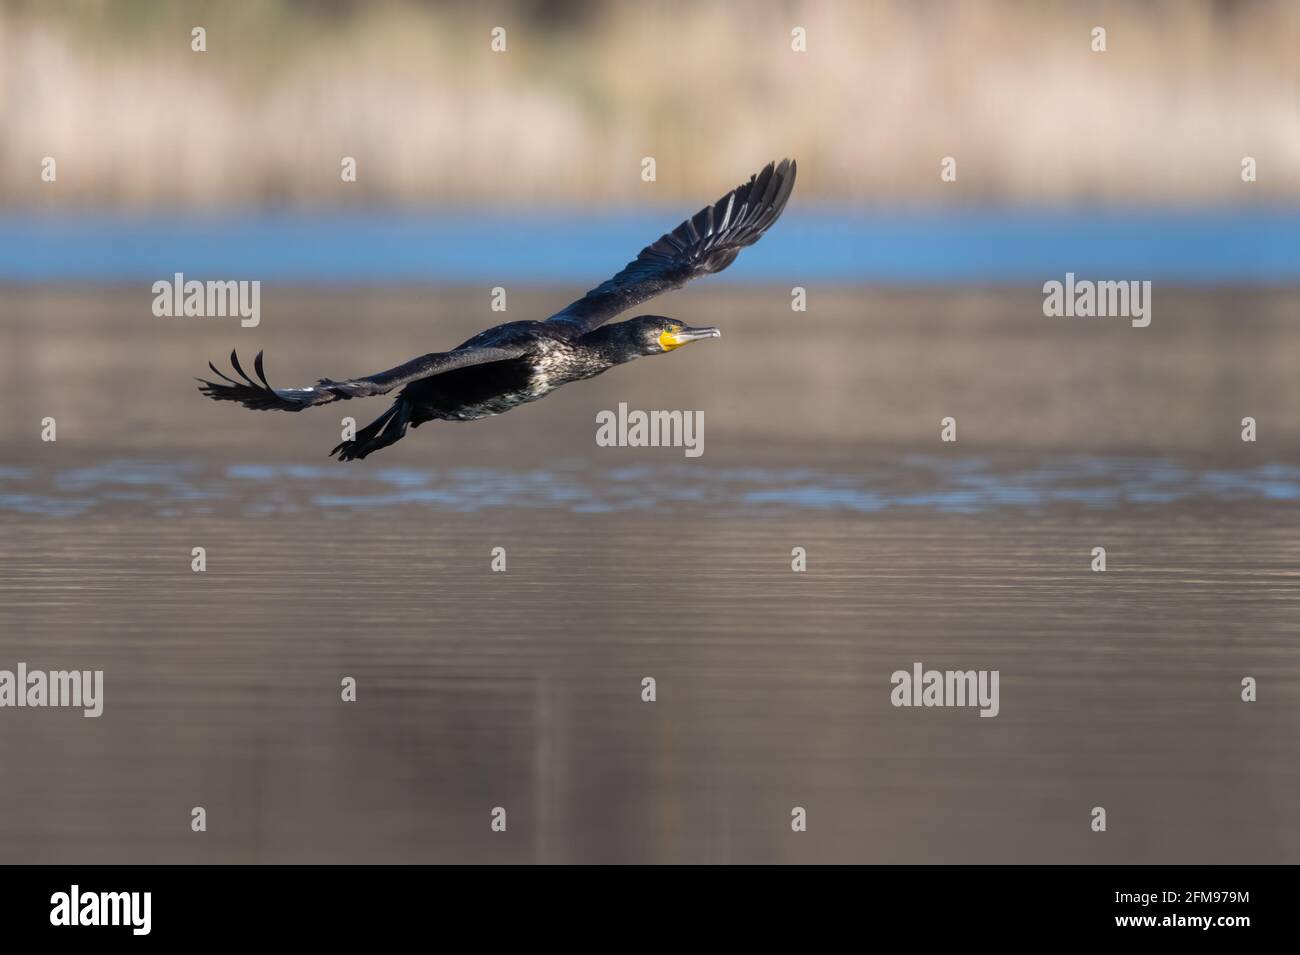 Great cormorant (Phalacrocorax carbo) flying across water Stock Photo